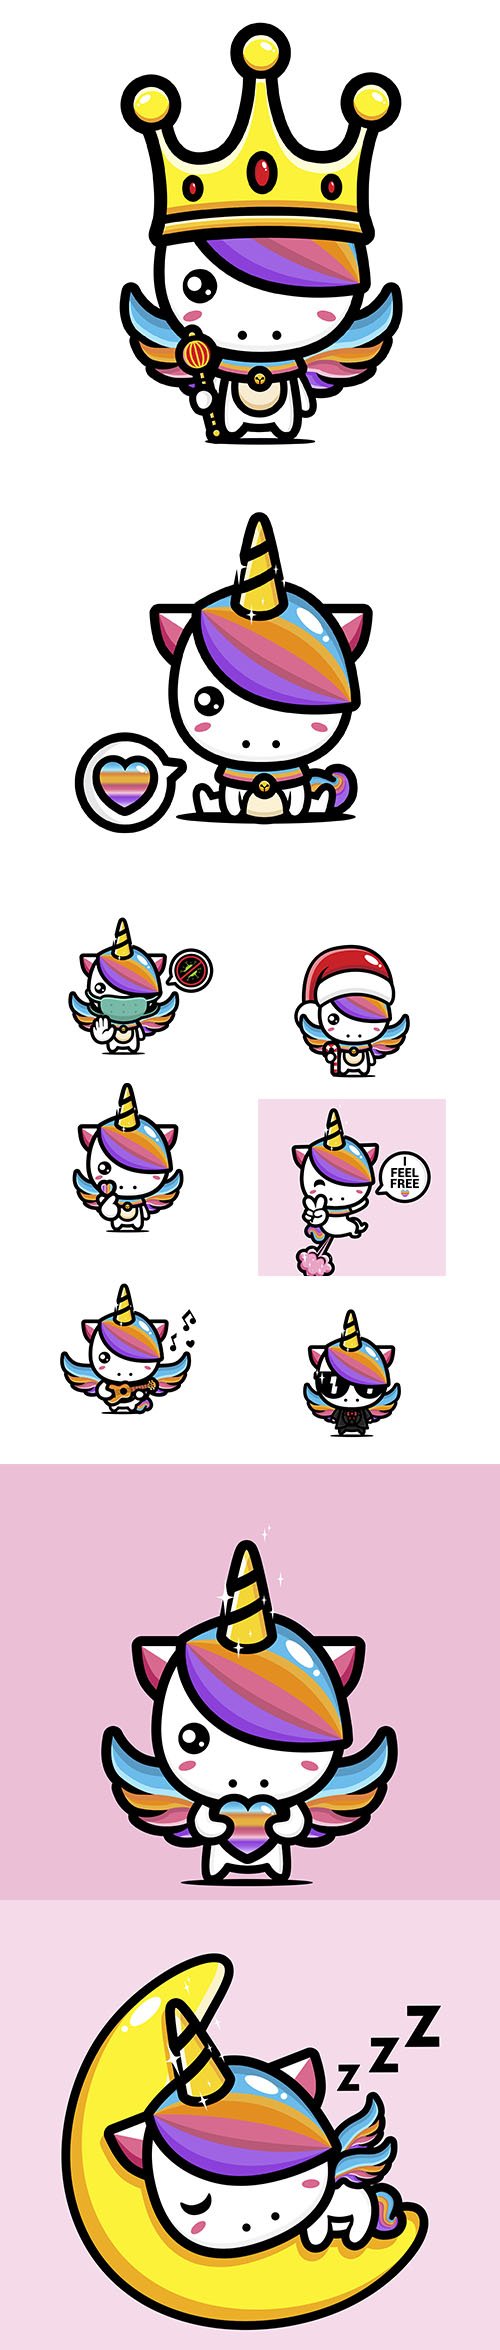 Cute unicorn design set